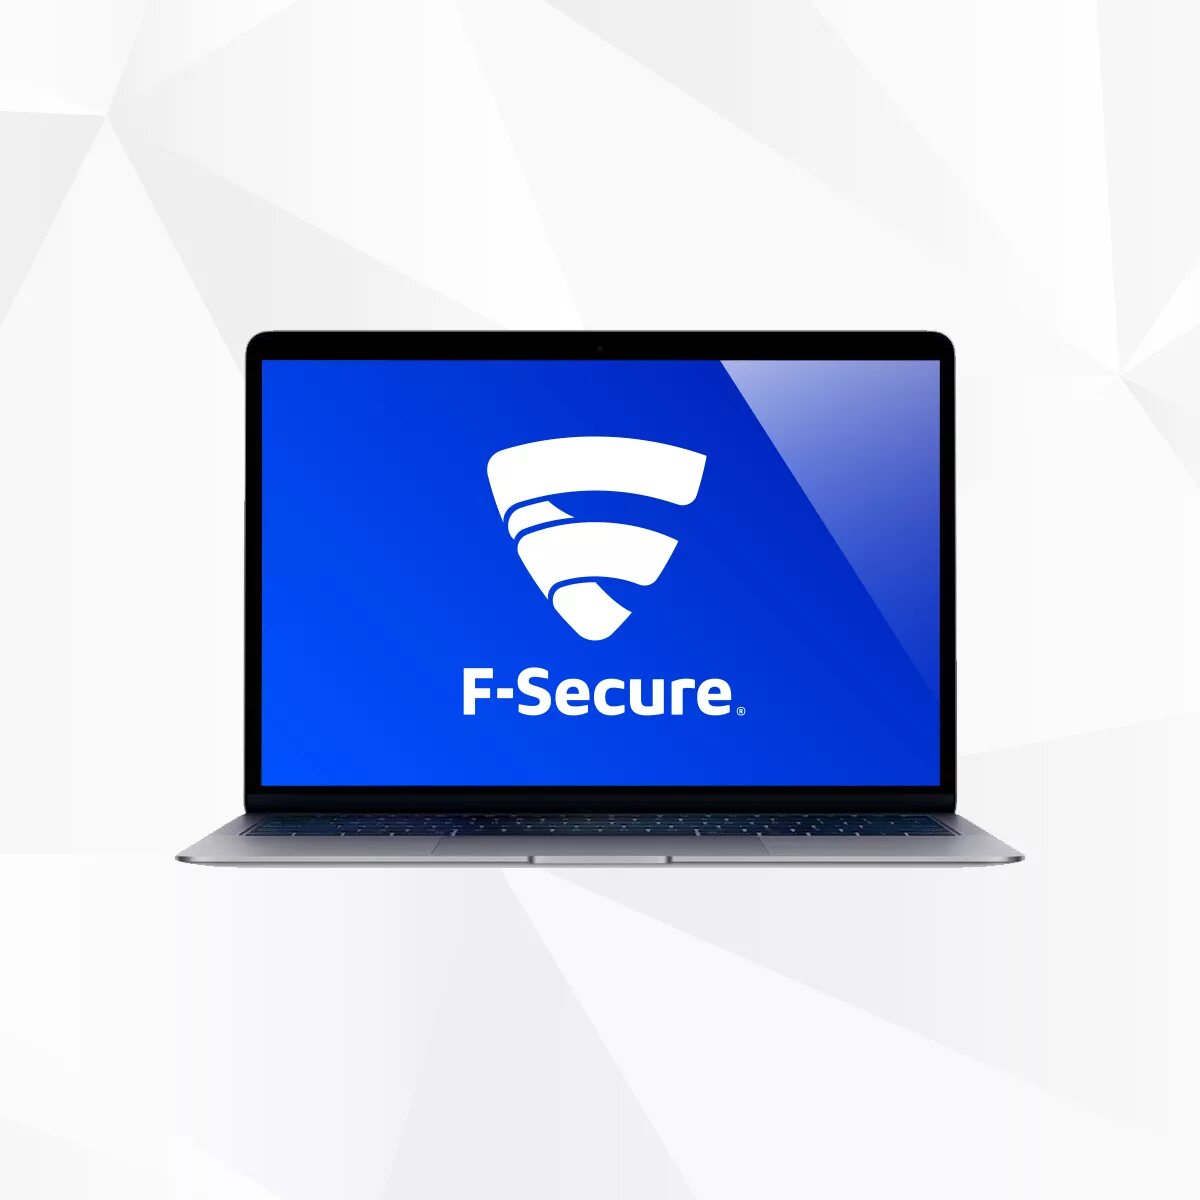 F virus. F-secure. F-secure Anti-virus. F-secure Anti-virus логотип. F-secure (Финляндия).